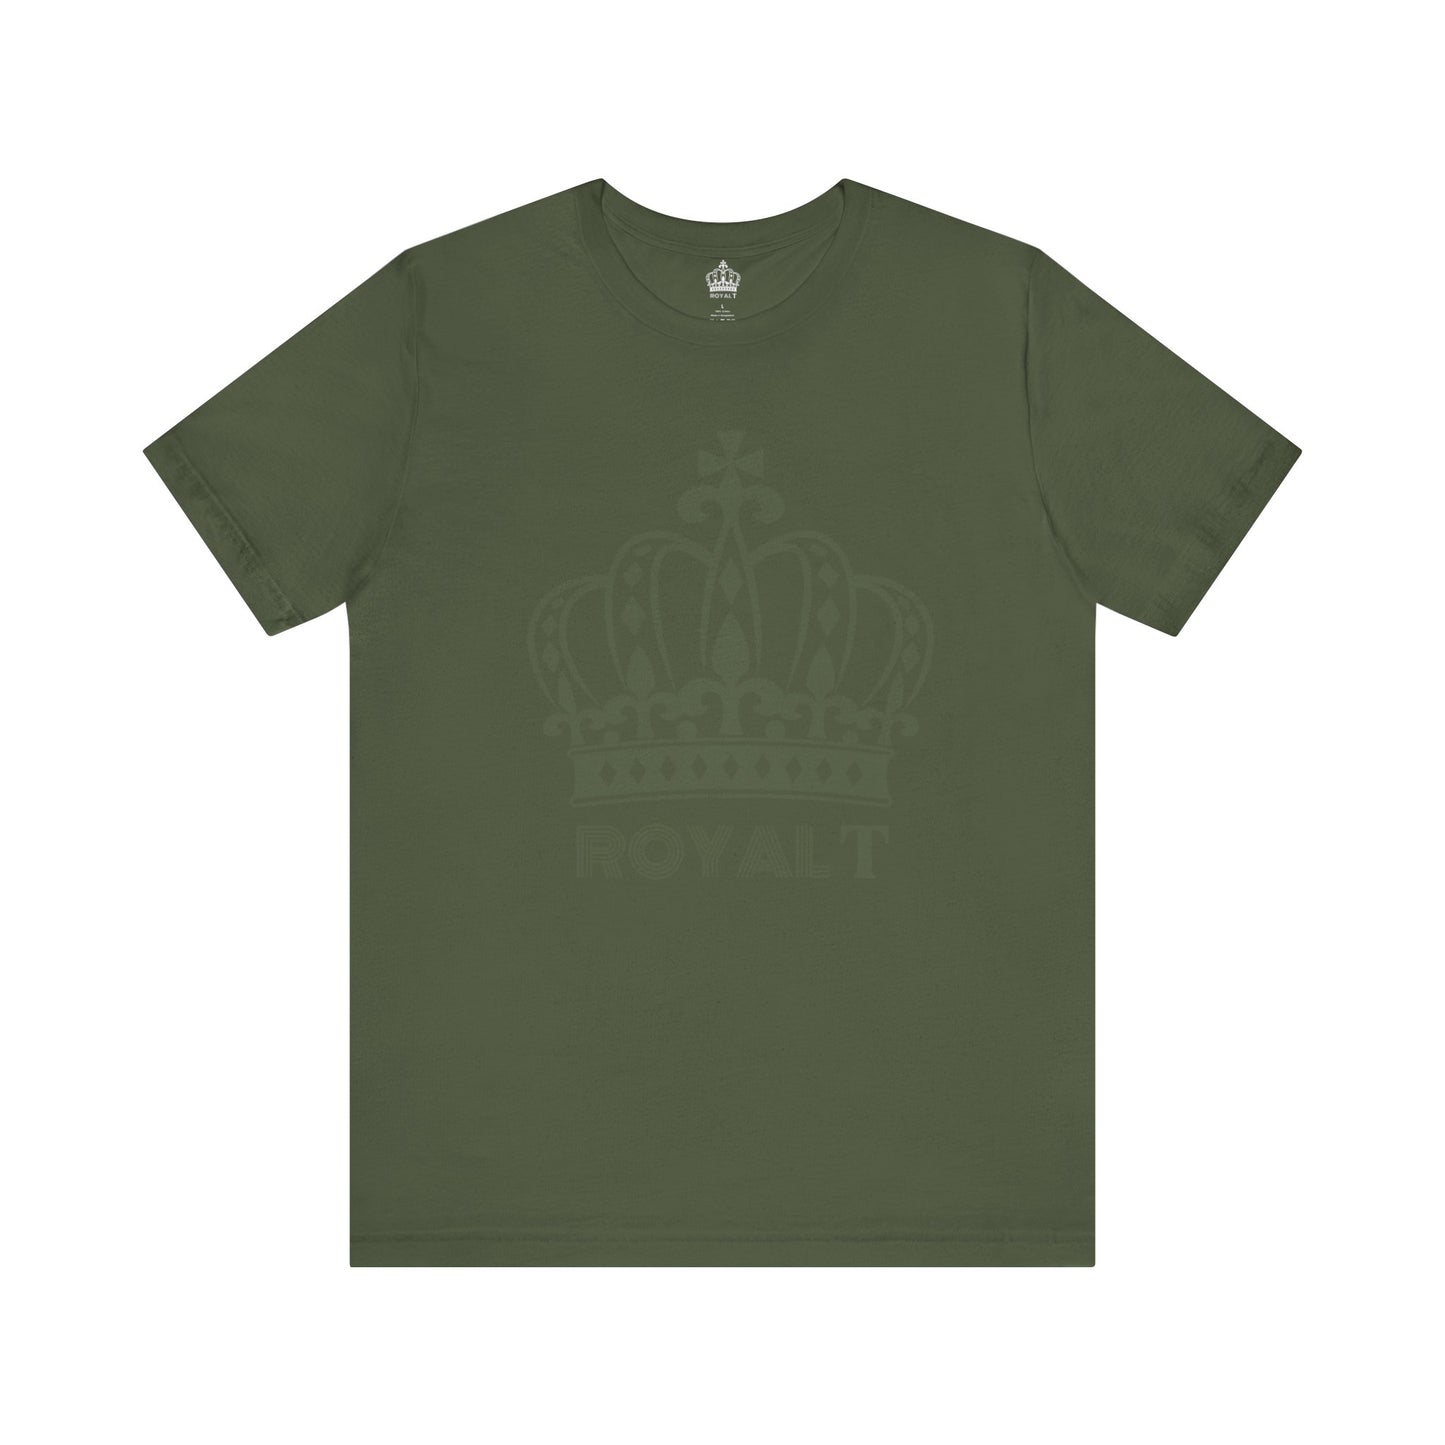 Military Green - Unisex Jersey Short Sleeve T Shirt - Green Royal T